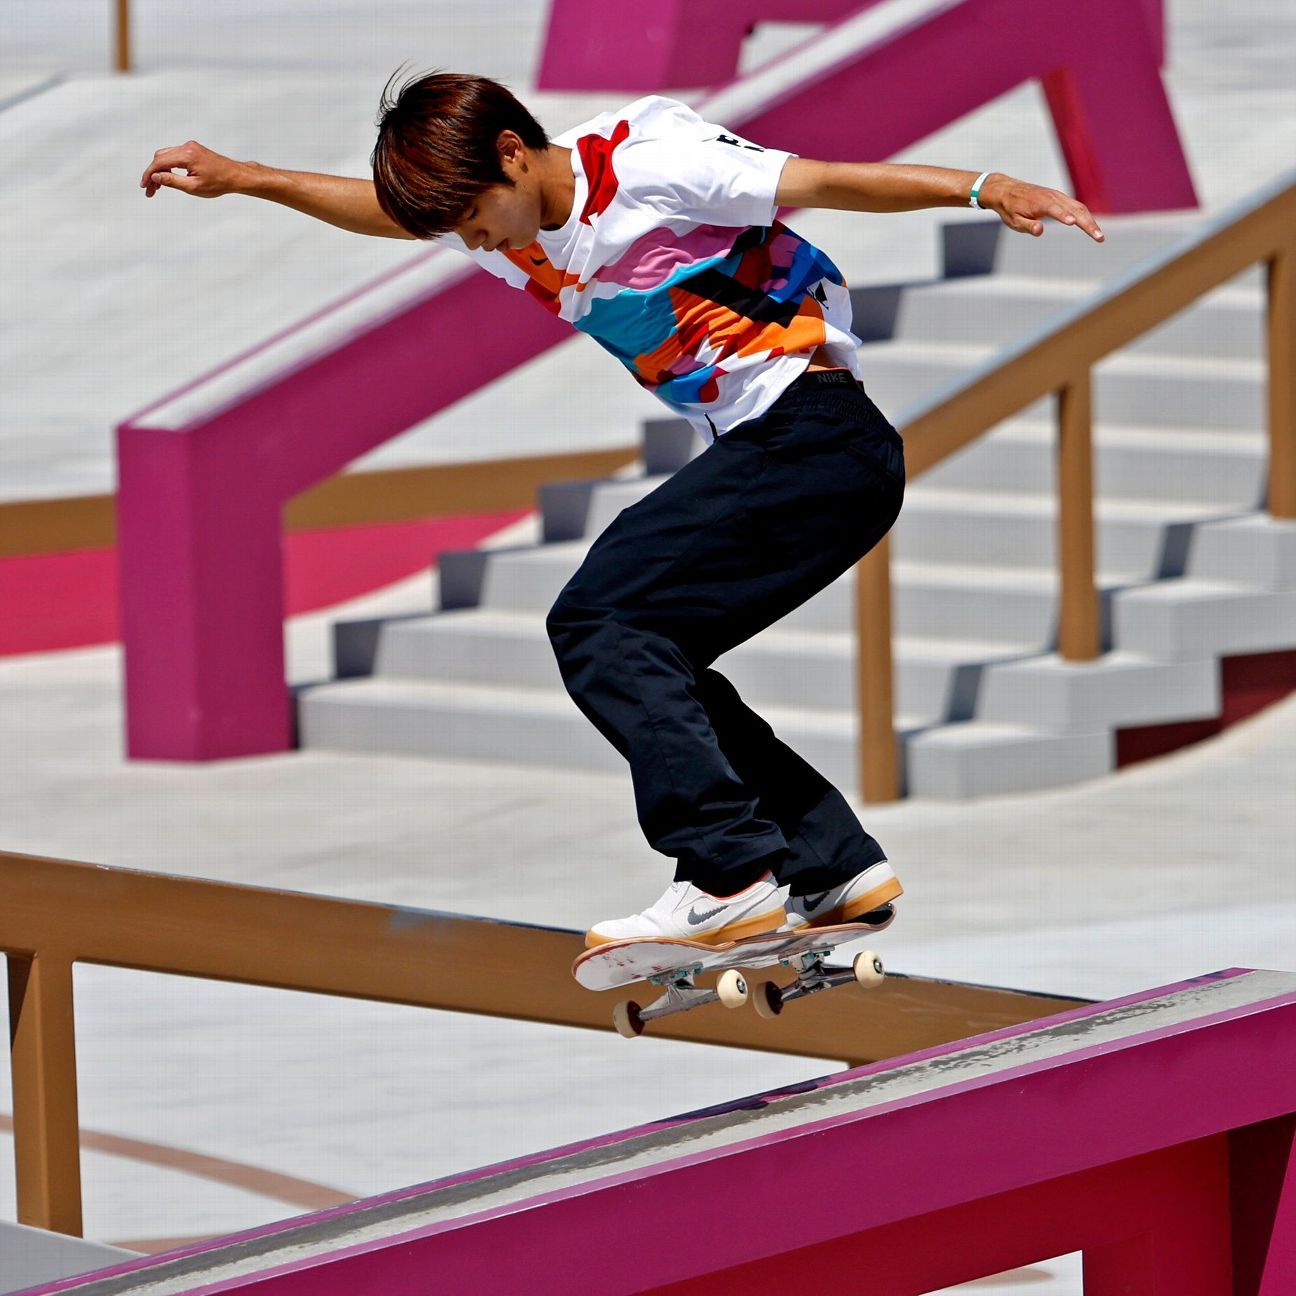 Japan's Yuto Horigome wins Olympics' first-ever skateboarding gold